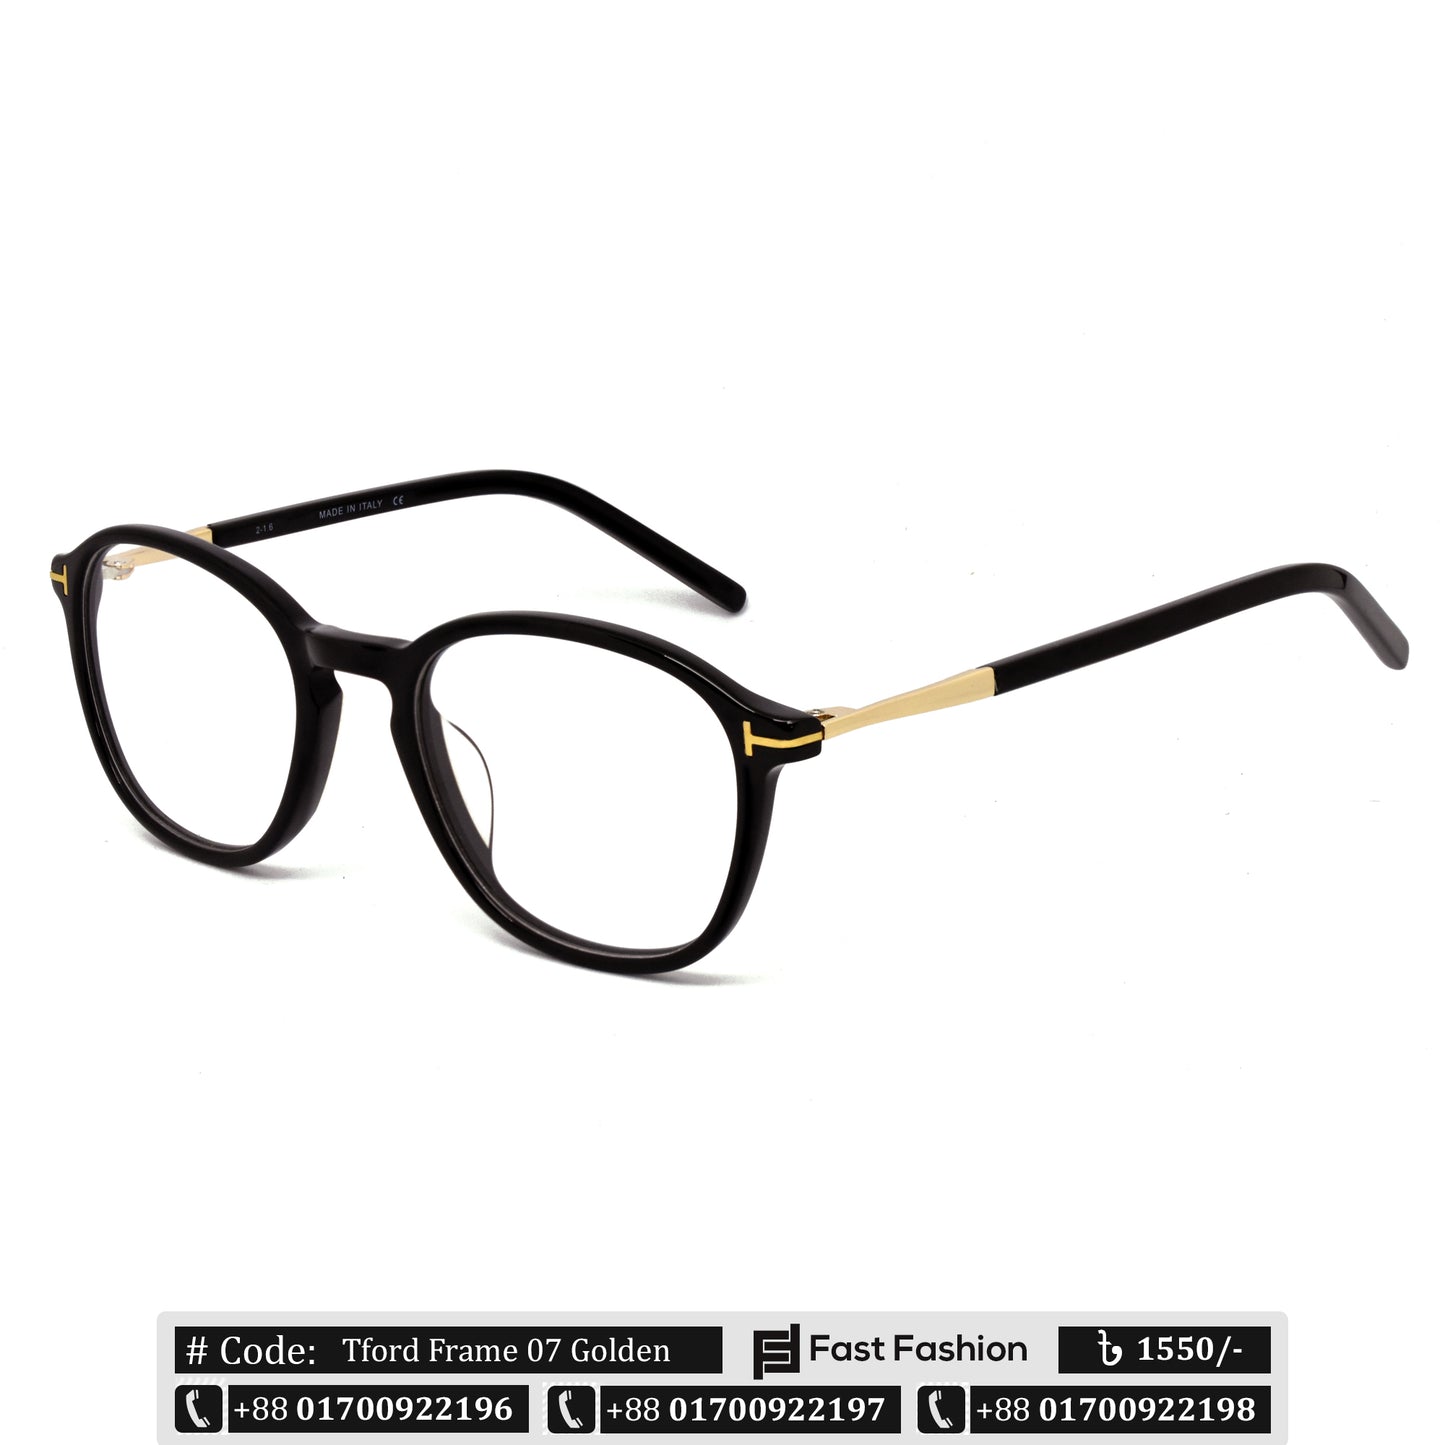 Trendy Stylish Optic Frame | TFord Frame 07 | Premium Quality